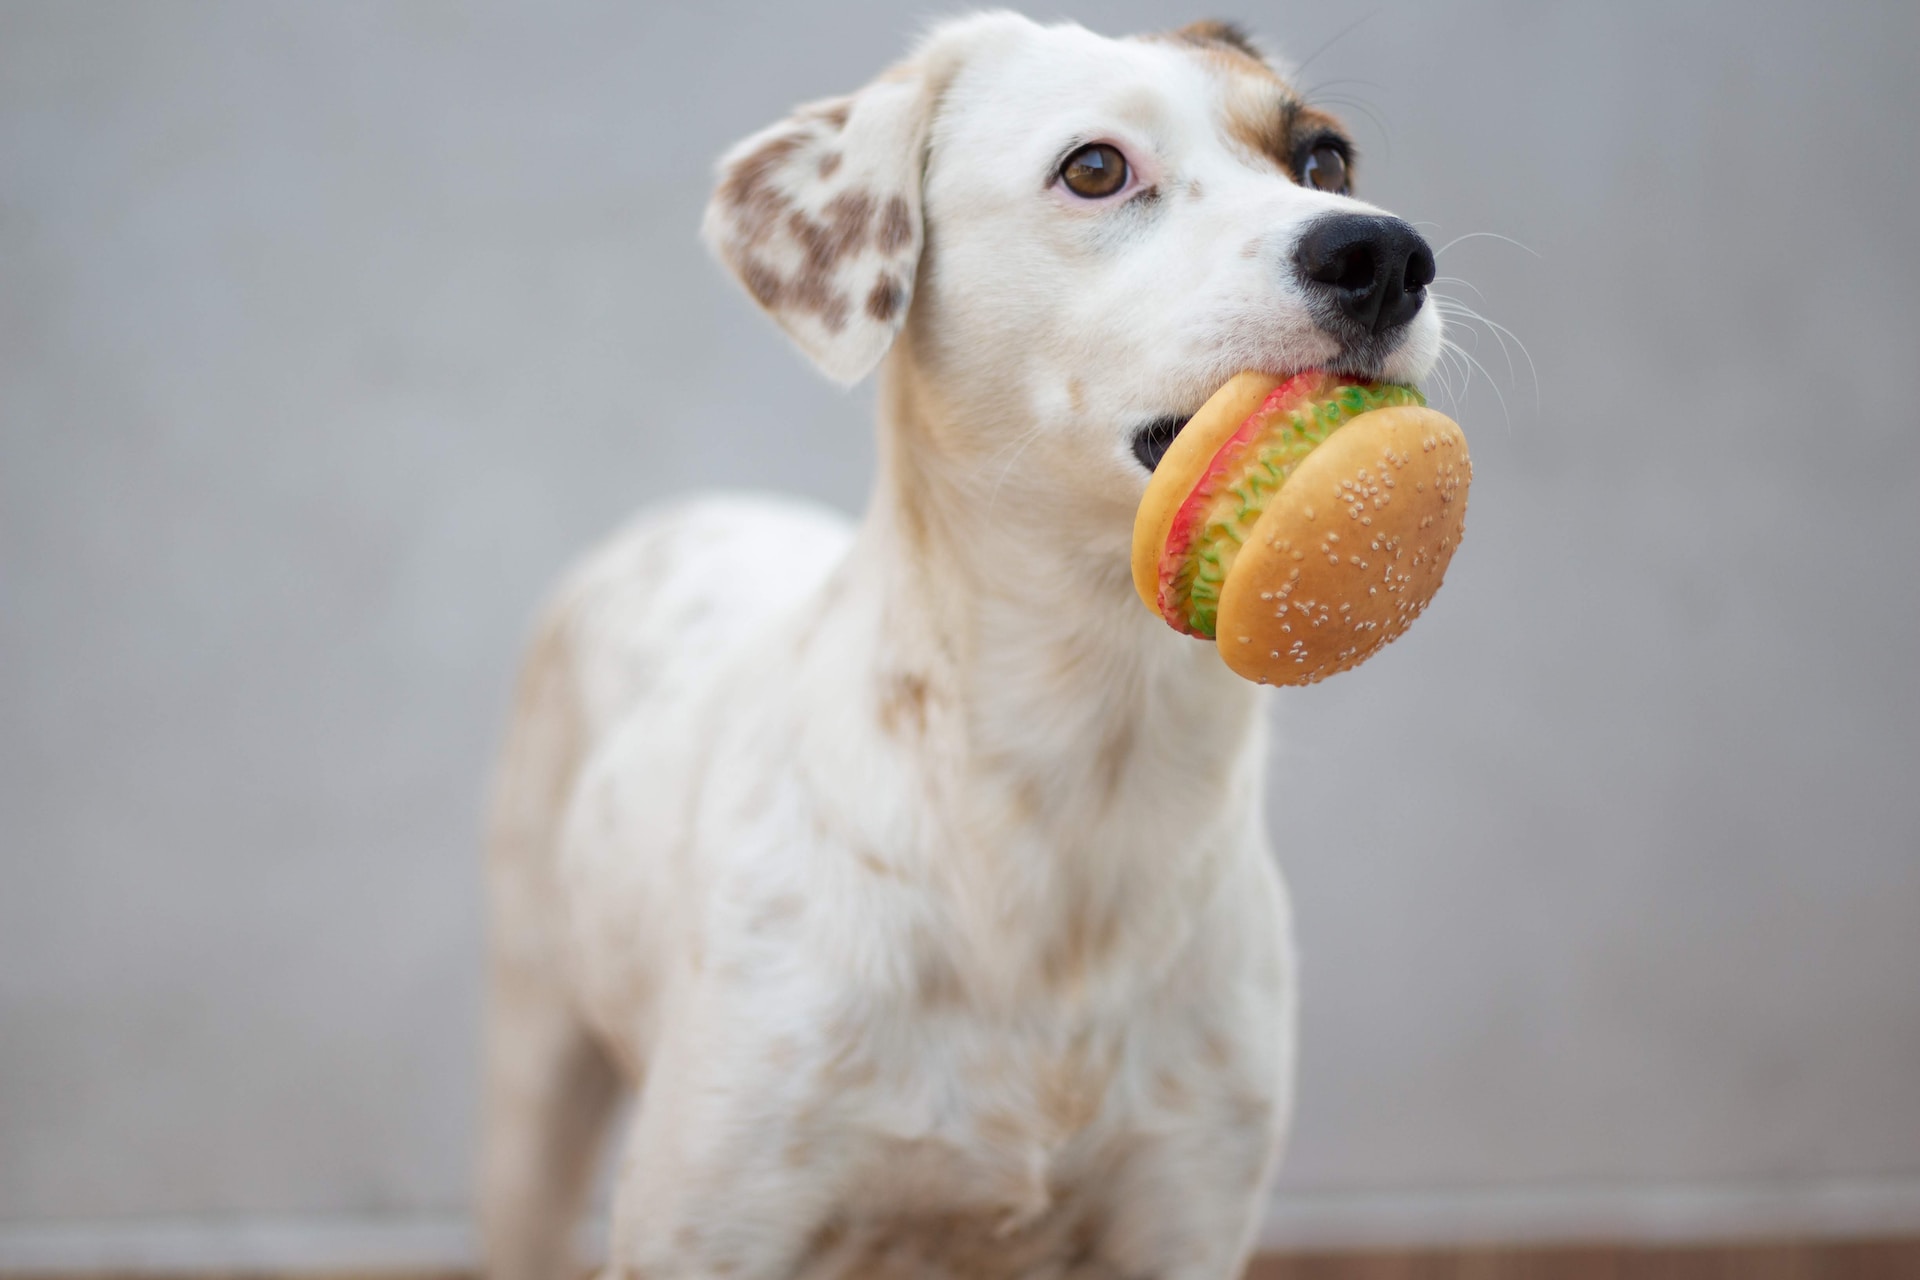 Dog eating a fake burger